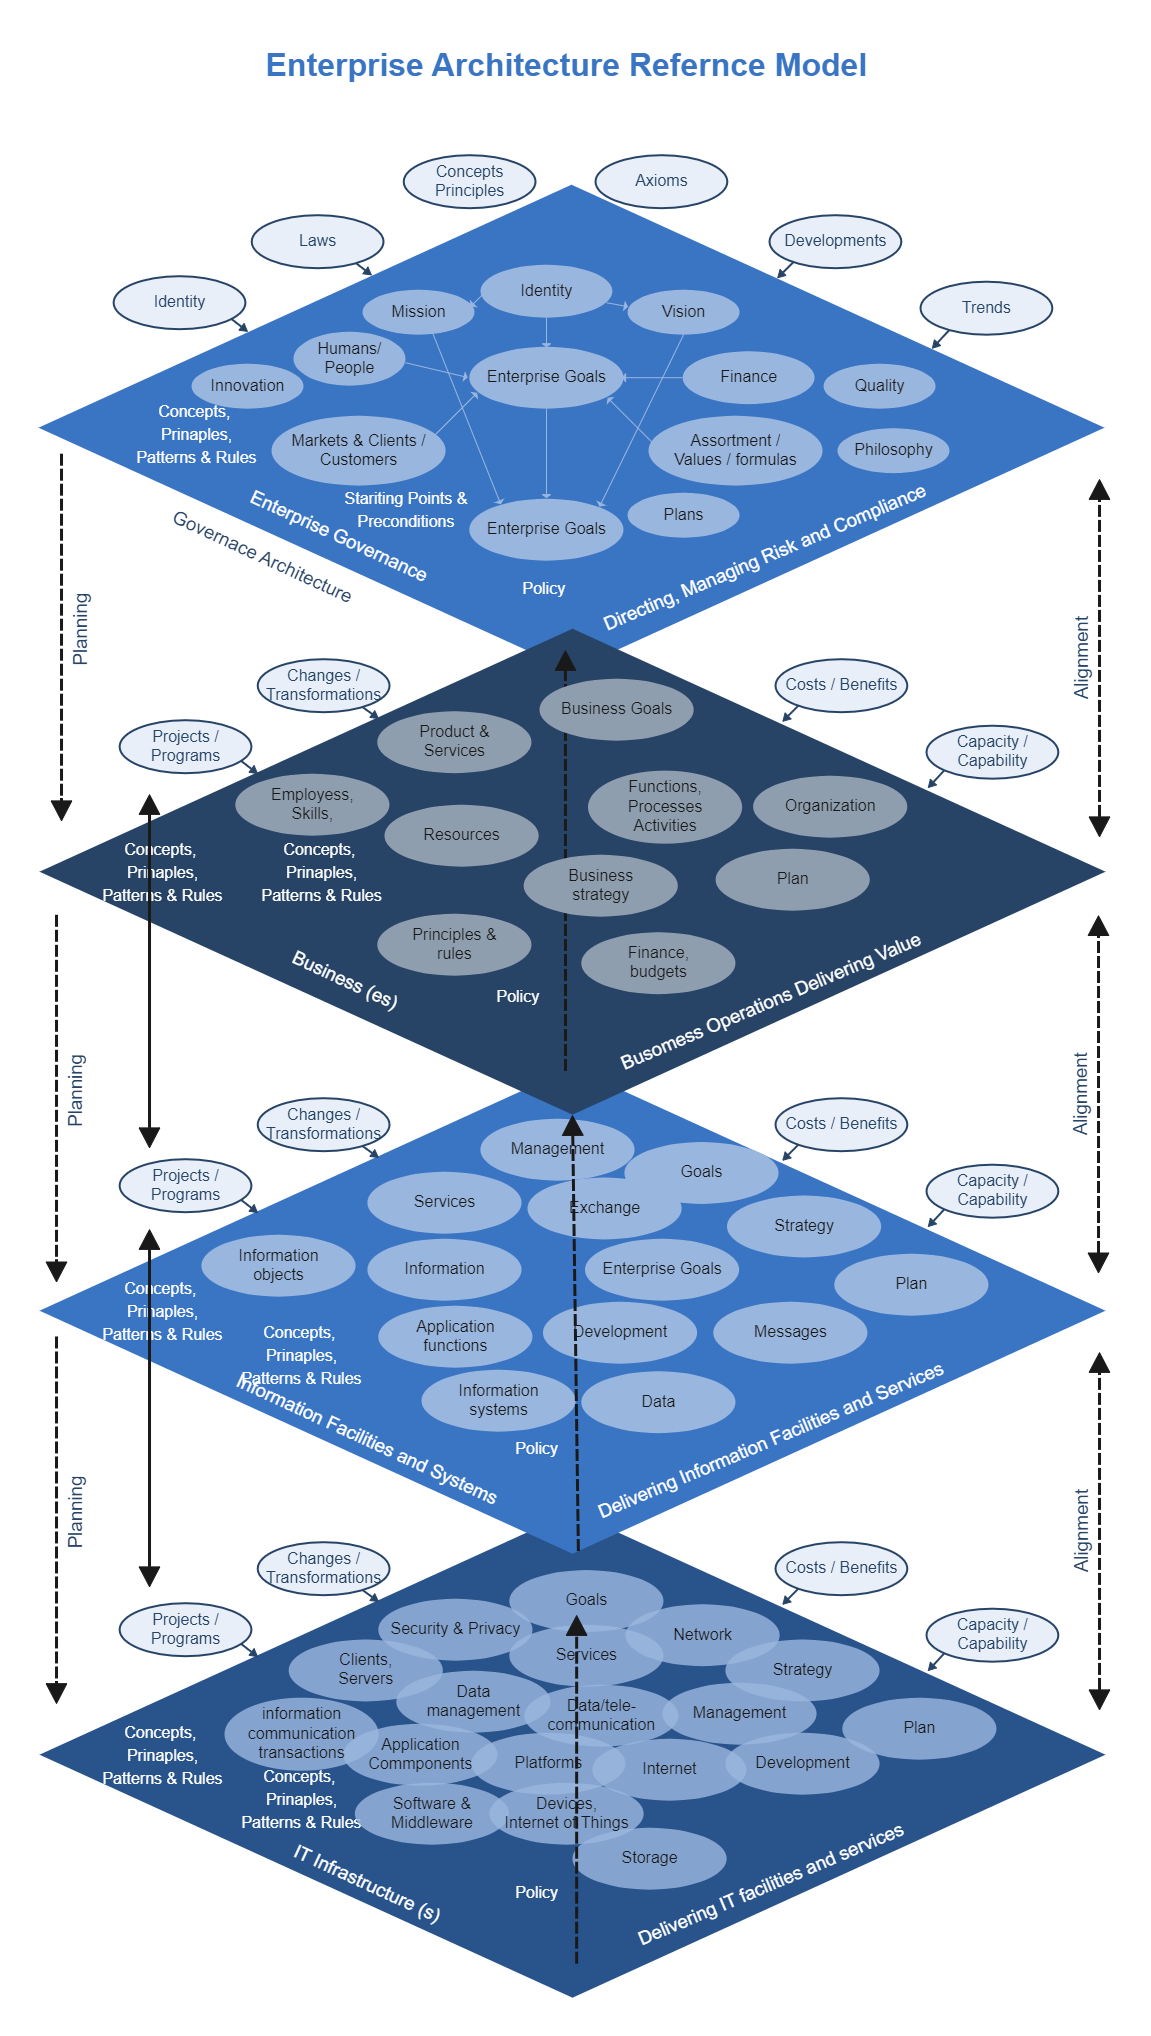 Enterprise Architecture Reference Model